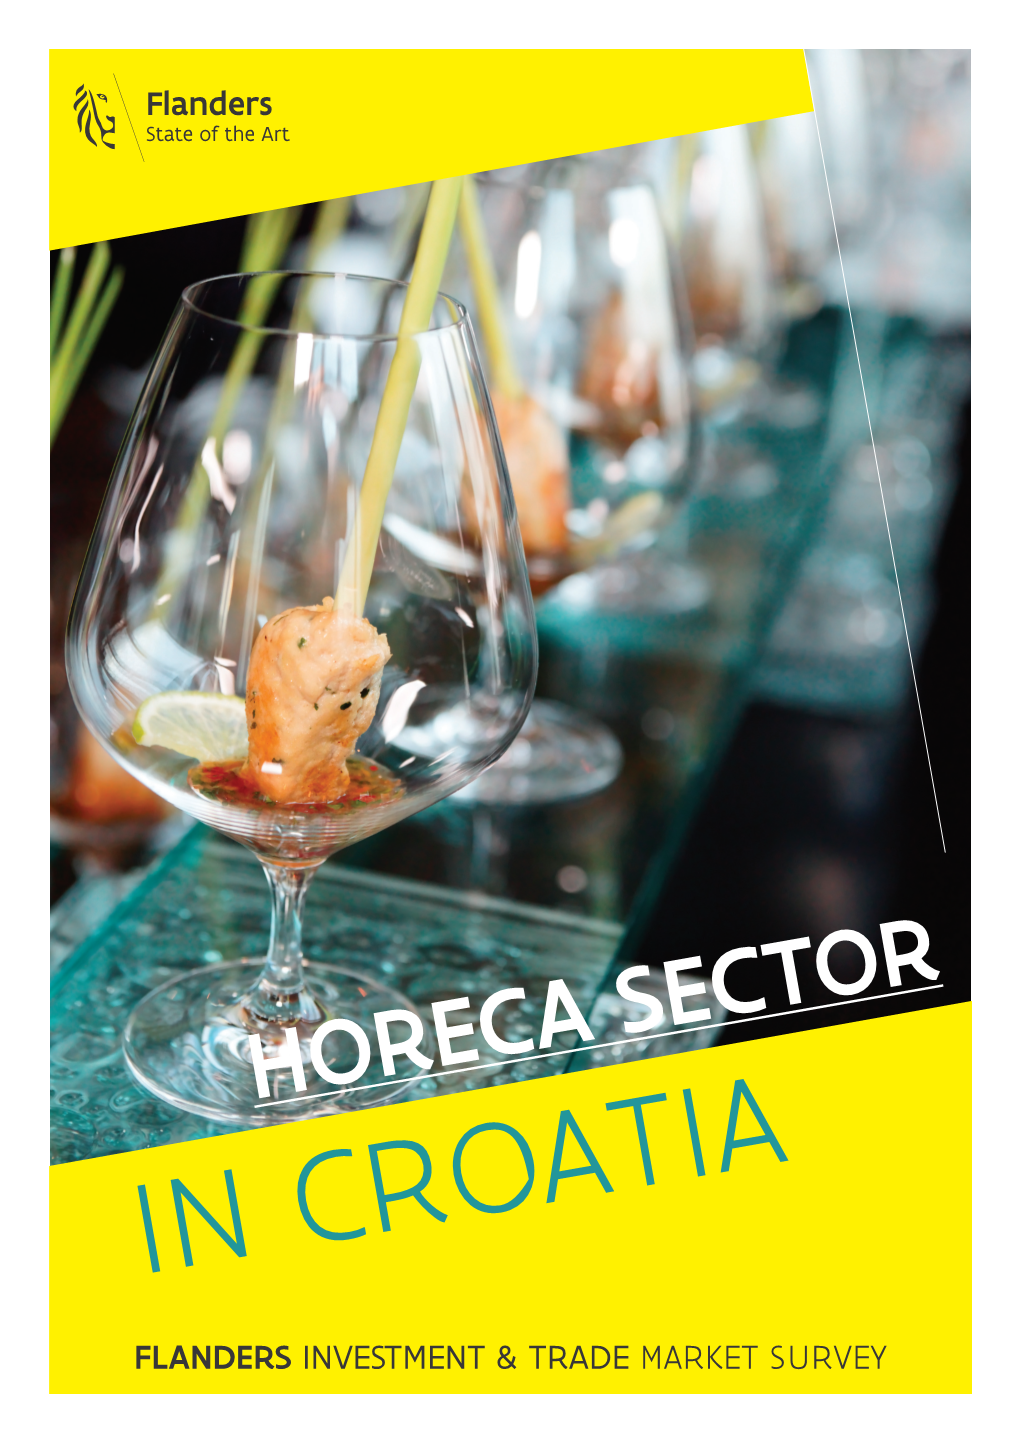 Horeca Sector in Croatia Flanders Investment & Trade Market Survey